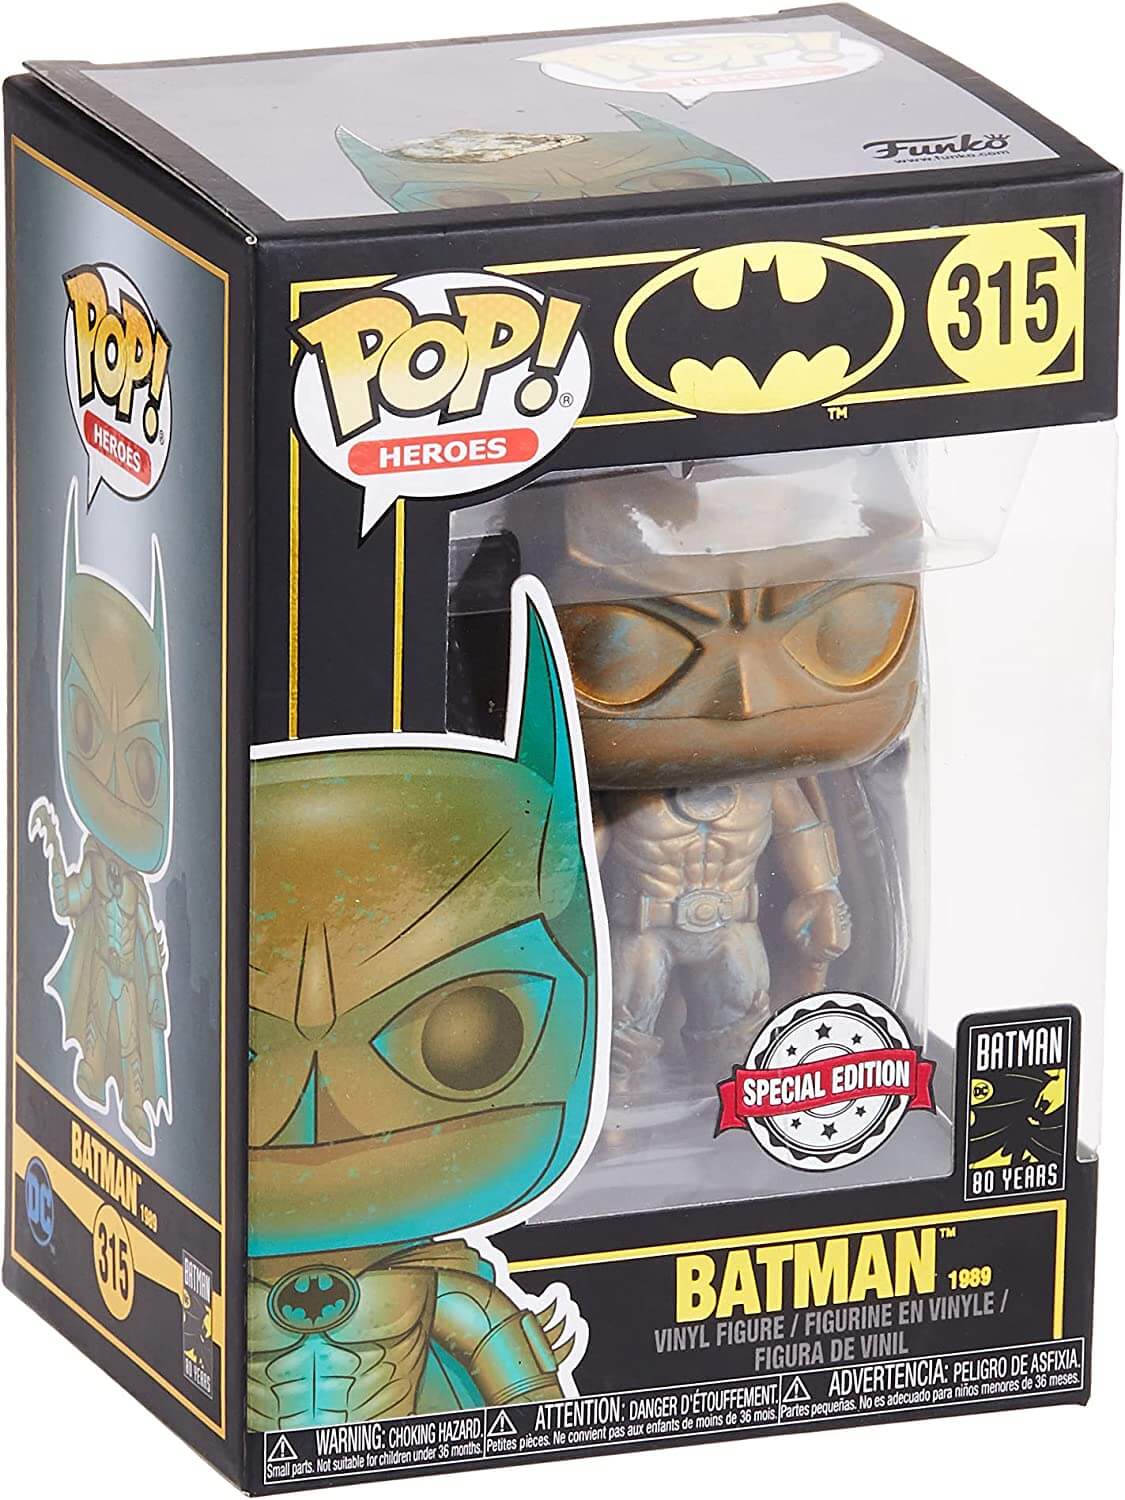 Фигурка Funko POP! Heroes: Batman 80th - Batman 1989 (Patina) фигурка бэтмен 80 лет funko pop standard